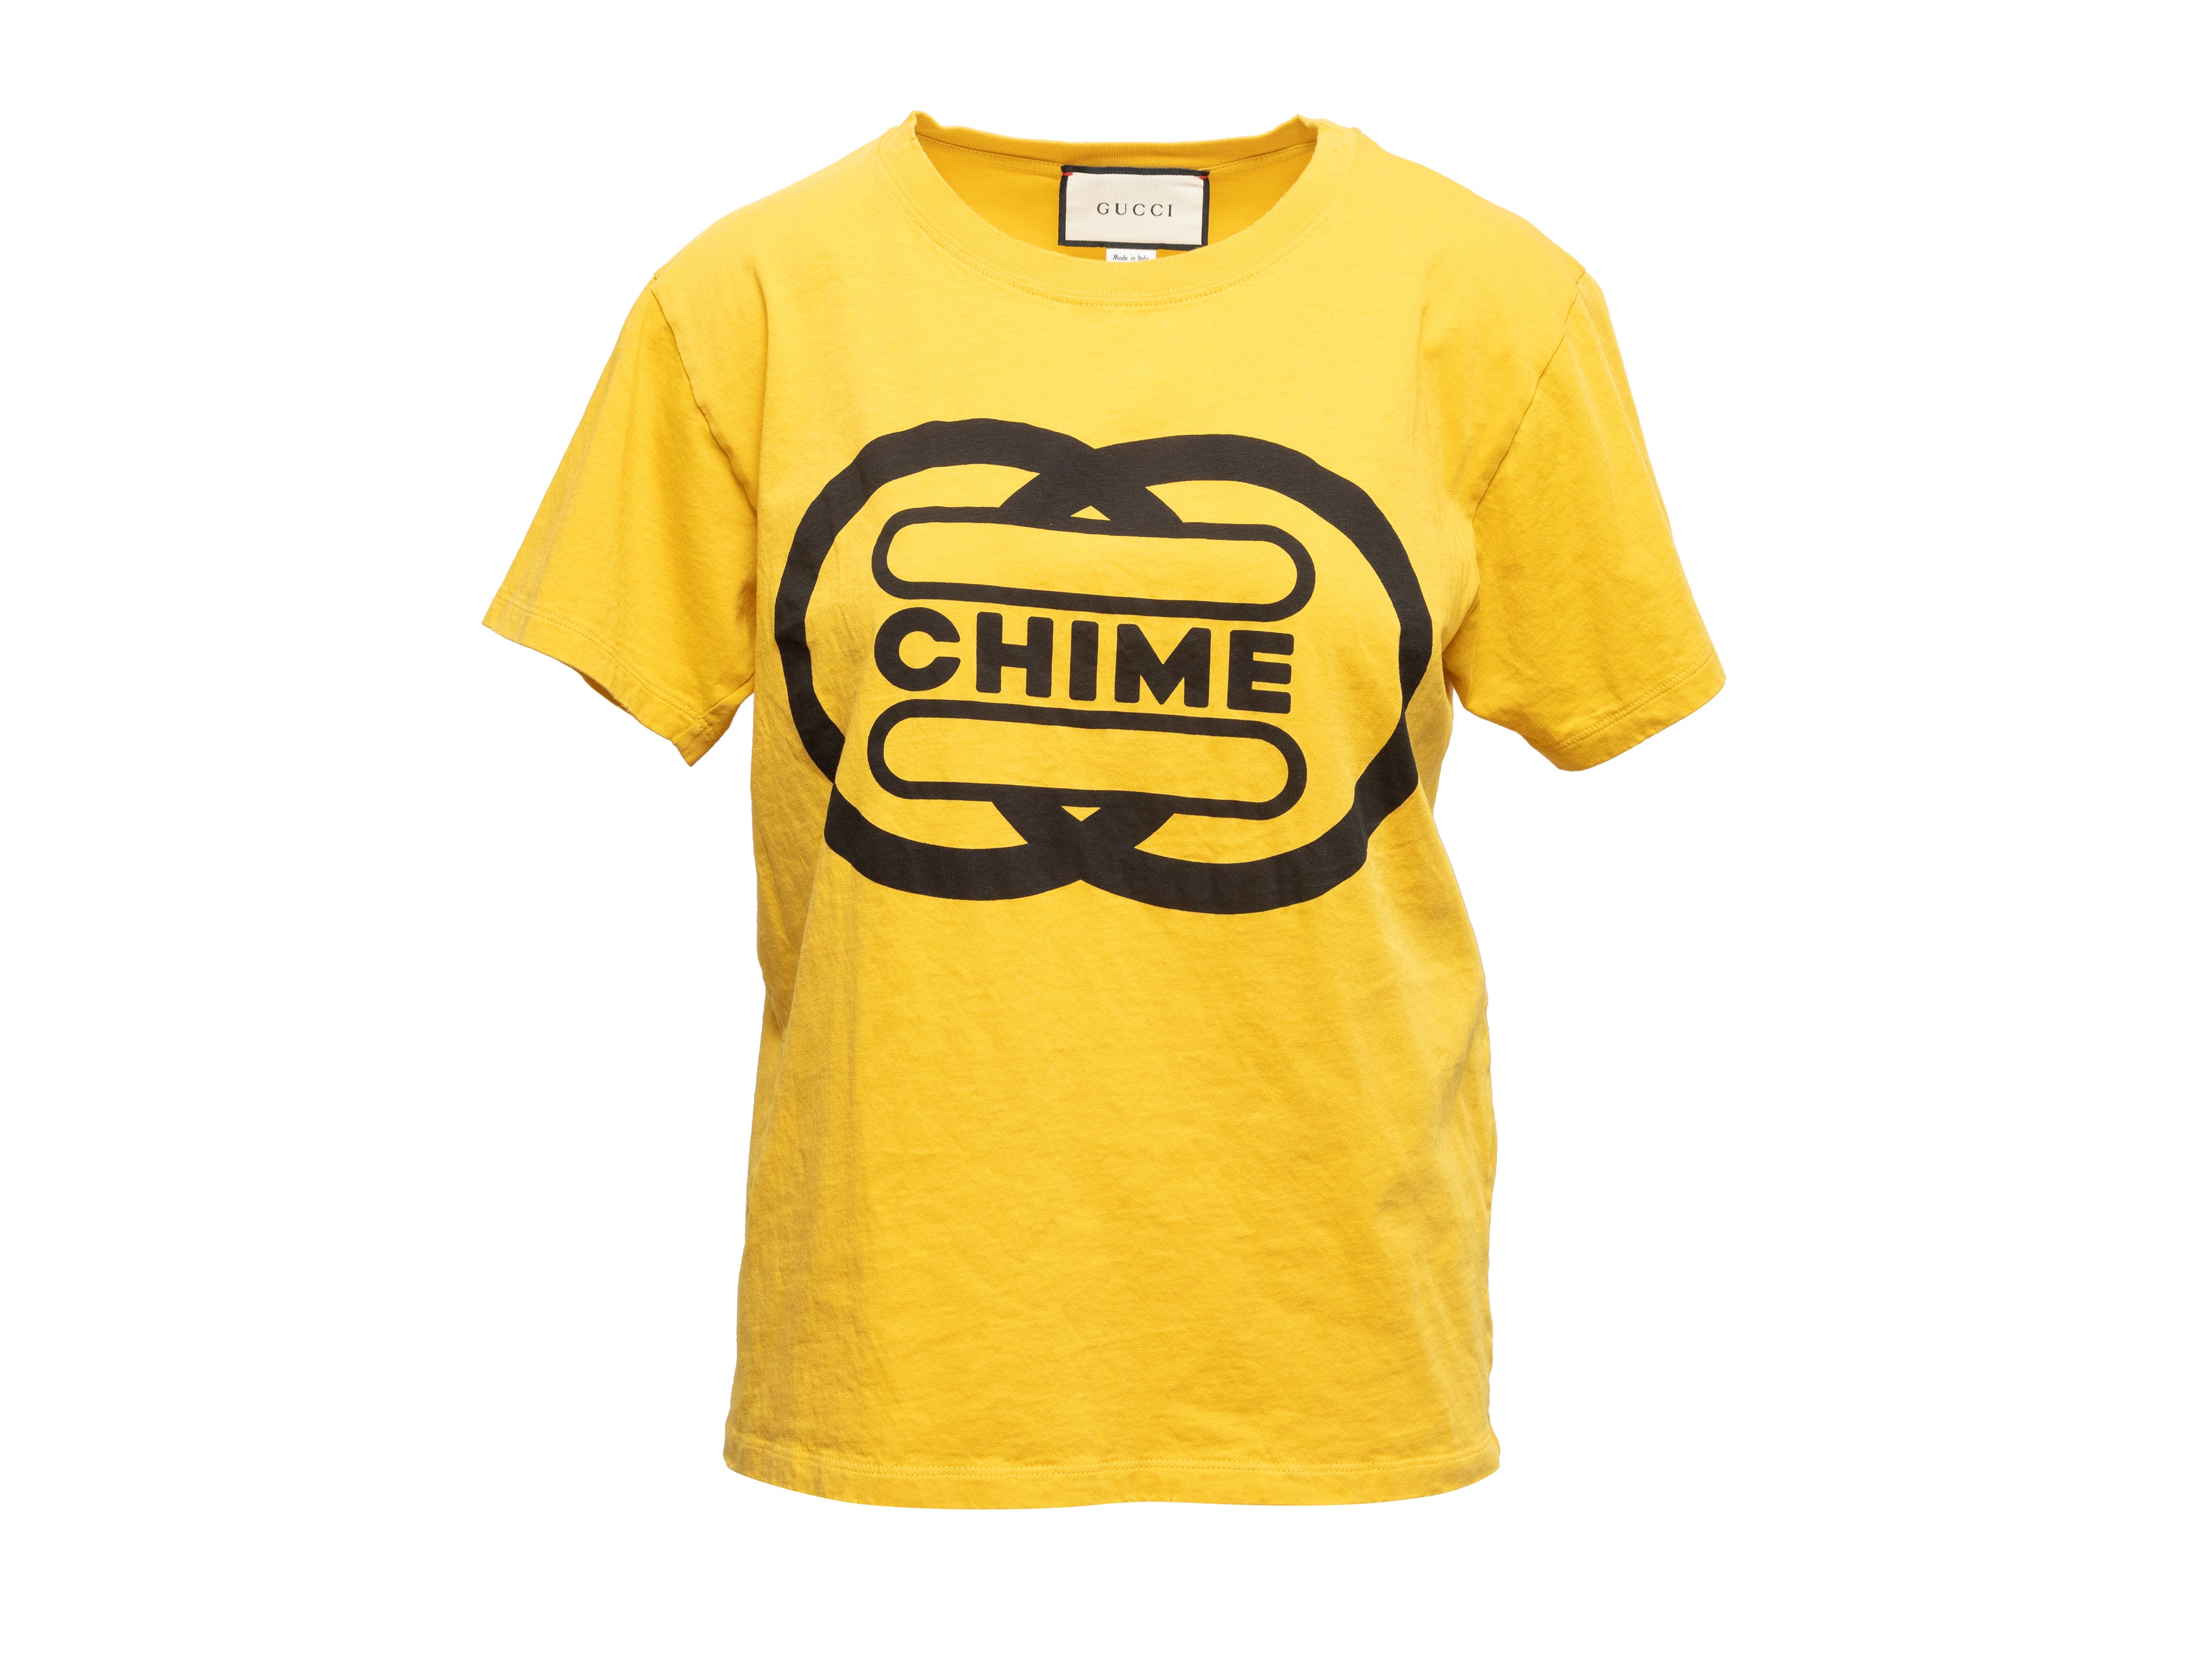 Yellow & Black Gucci Chime Short Sleeve T-Shirt | Revival